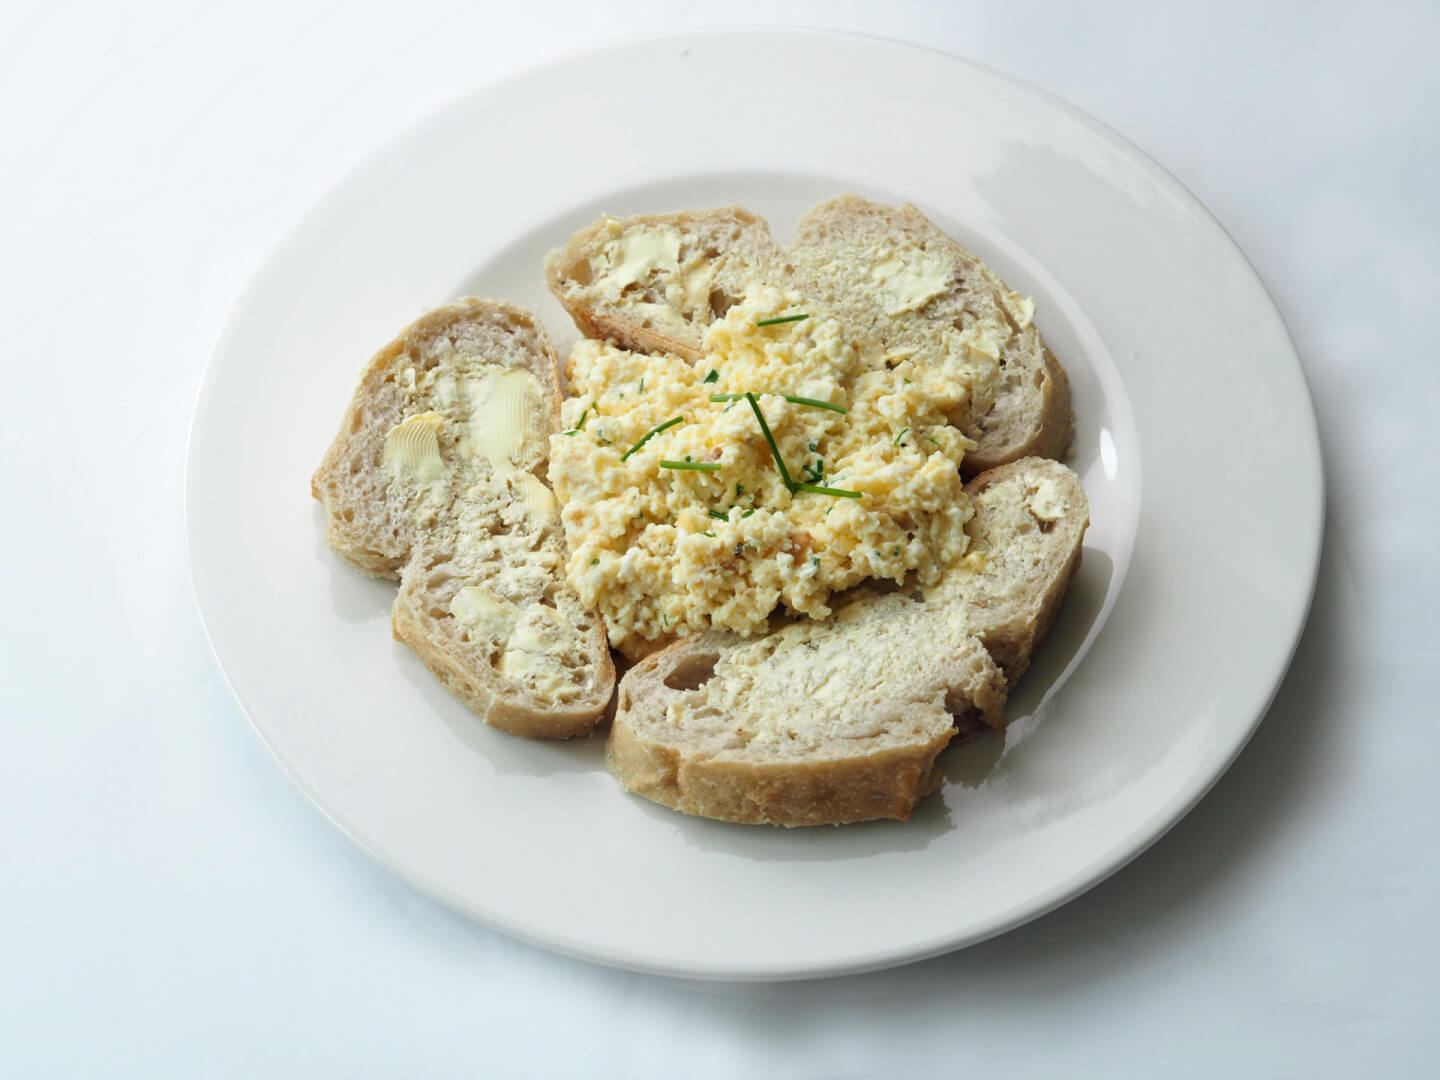 Arla Choose Goodness: Cheesy Scrambled Eggs